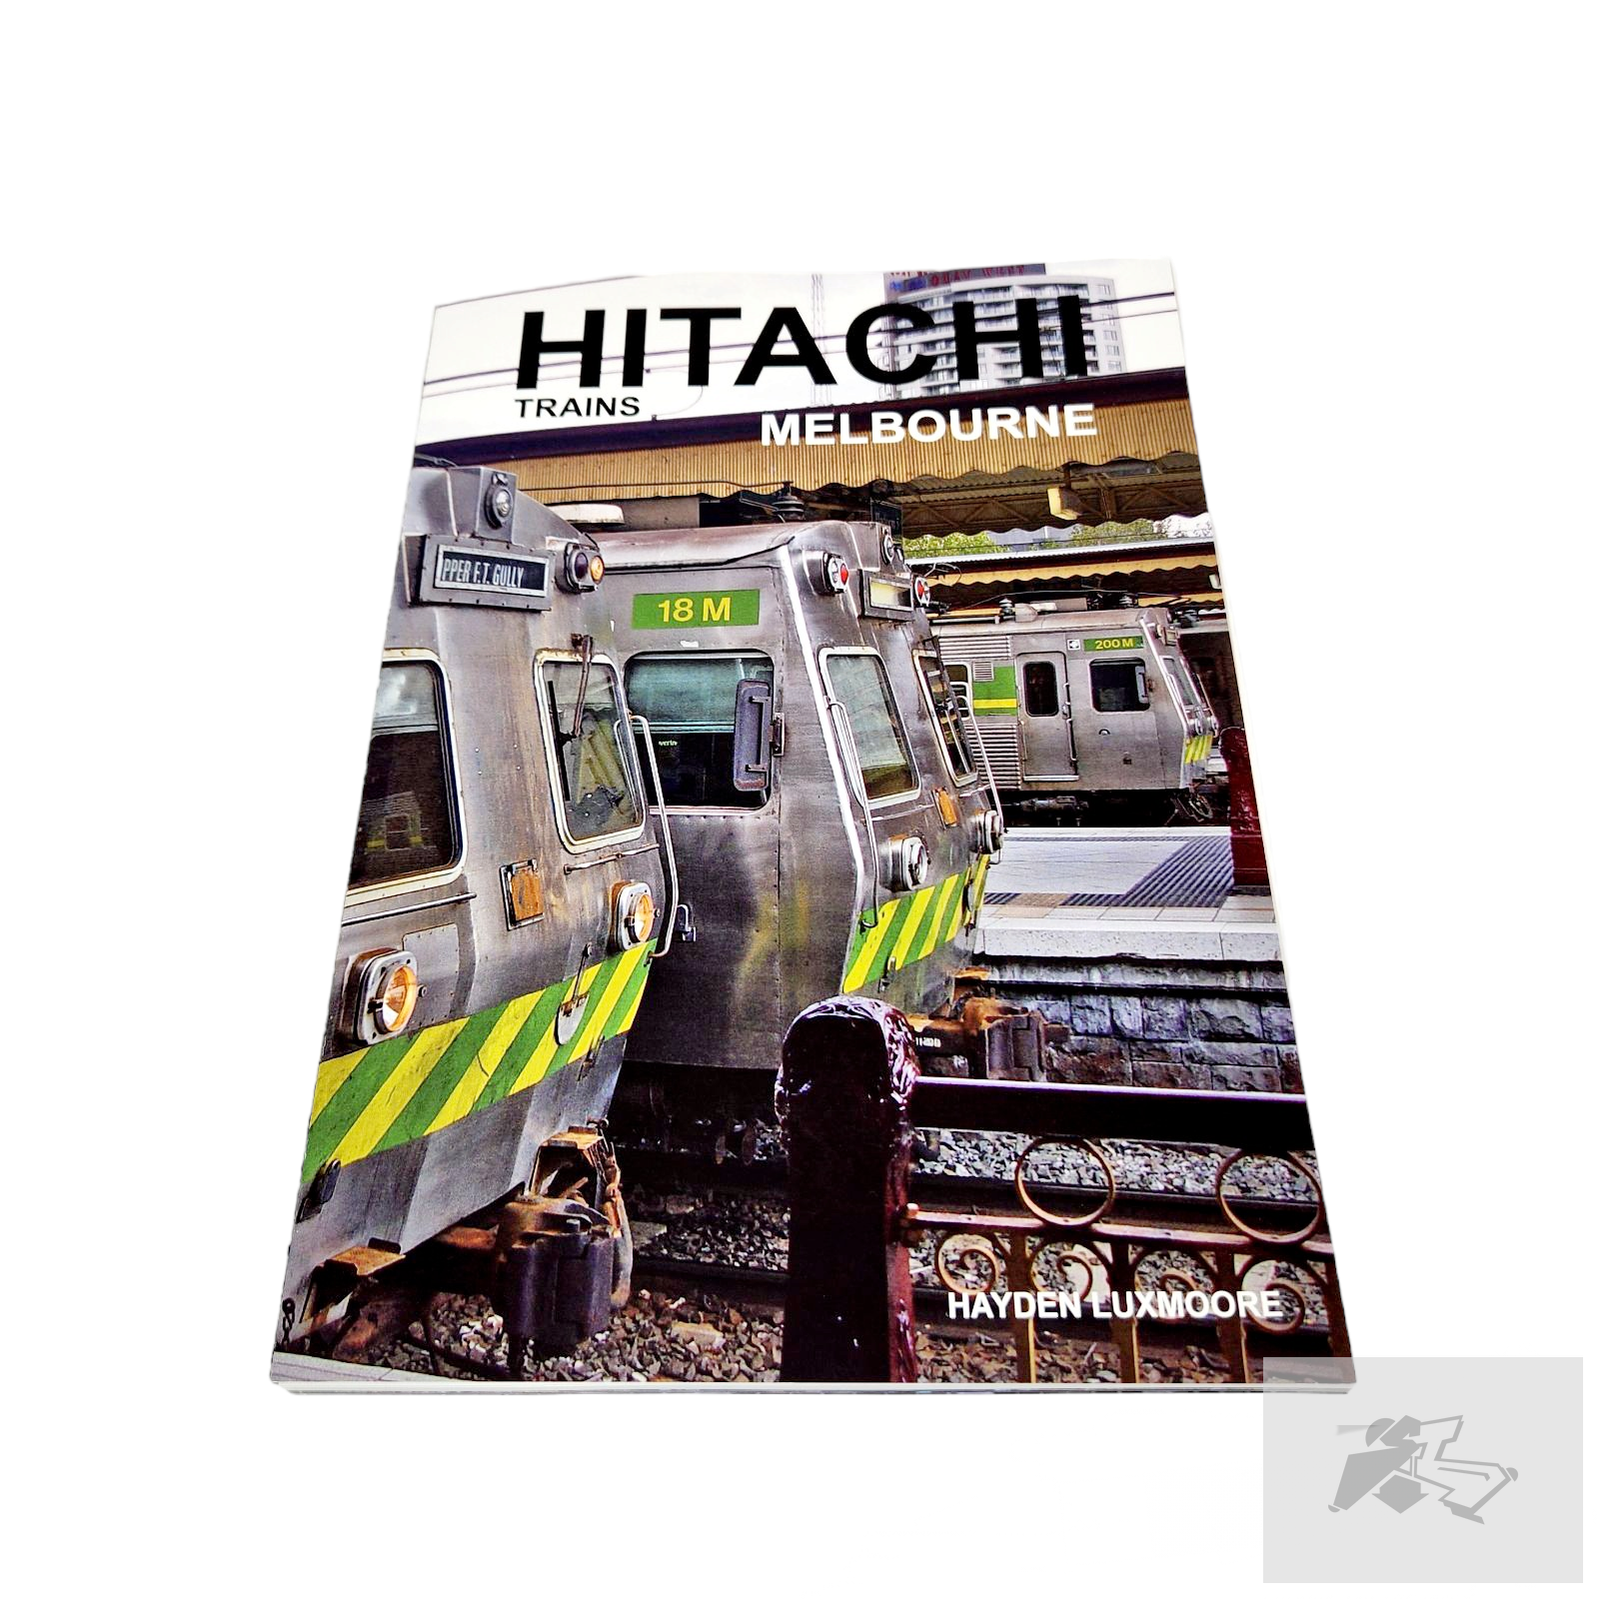 Hitachi Trains Melbourne. A photo book story of the iconic Hitachi train.-Silence Melbourne